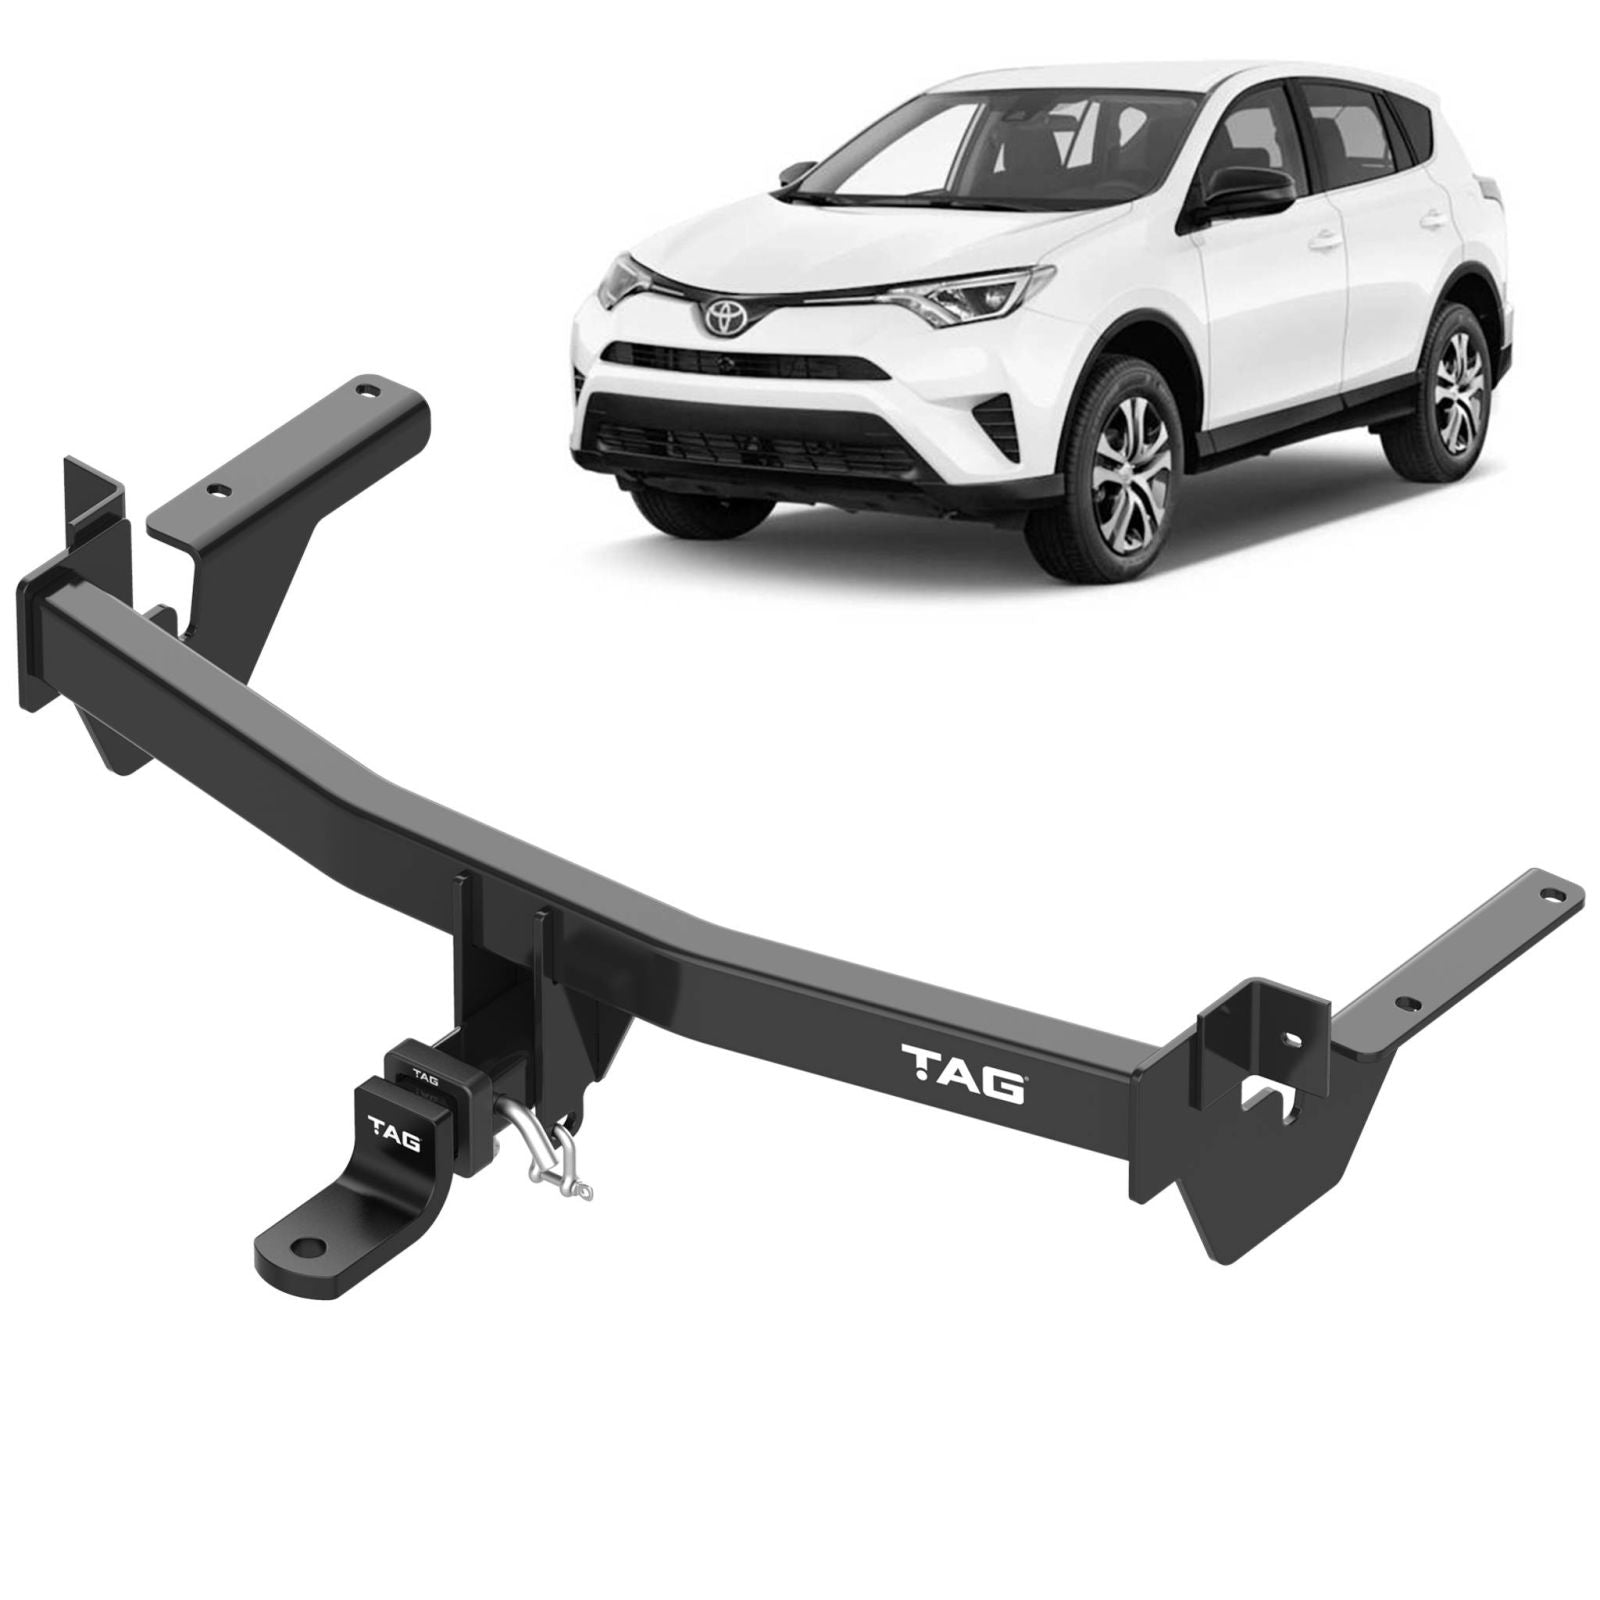 Tag - Towbar To Suit Toyota RAV4 ALA49R, ASA44R, ZSA42R (02/2013 - 12/2018)